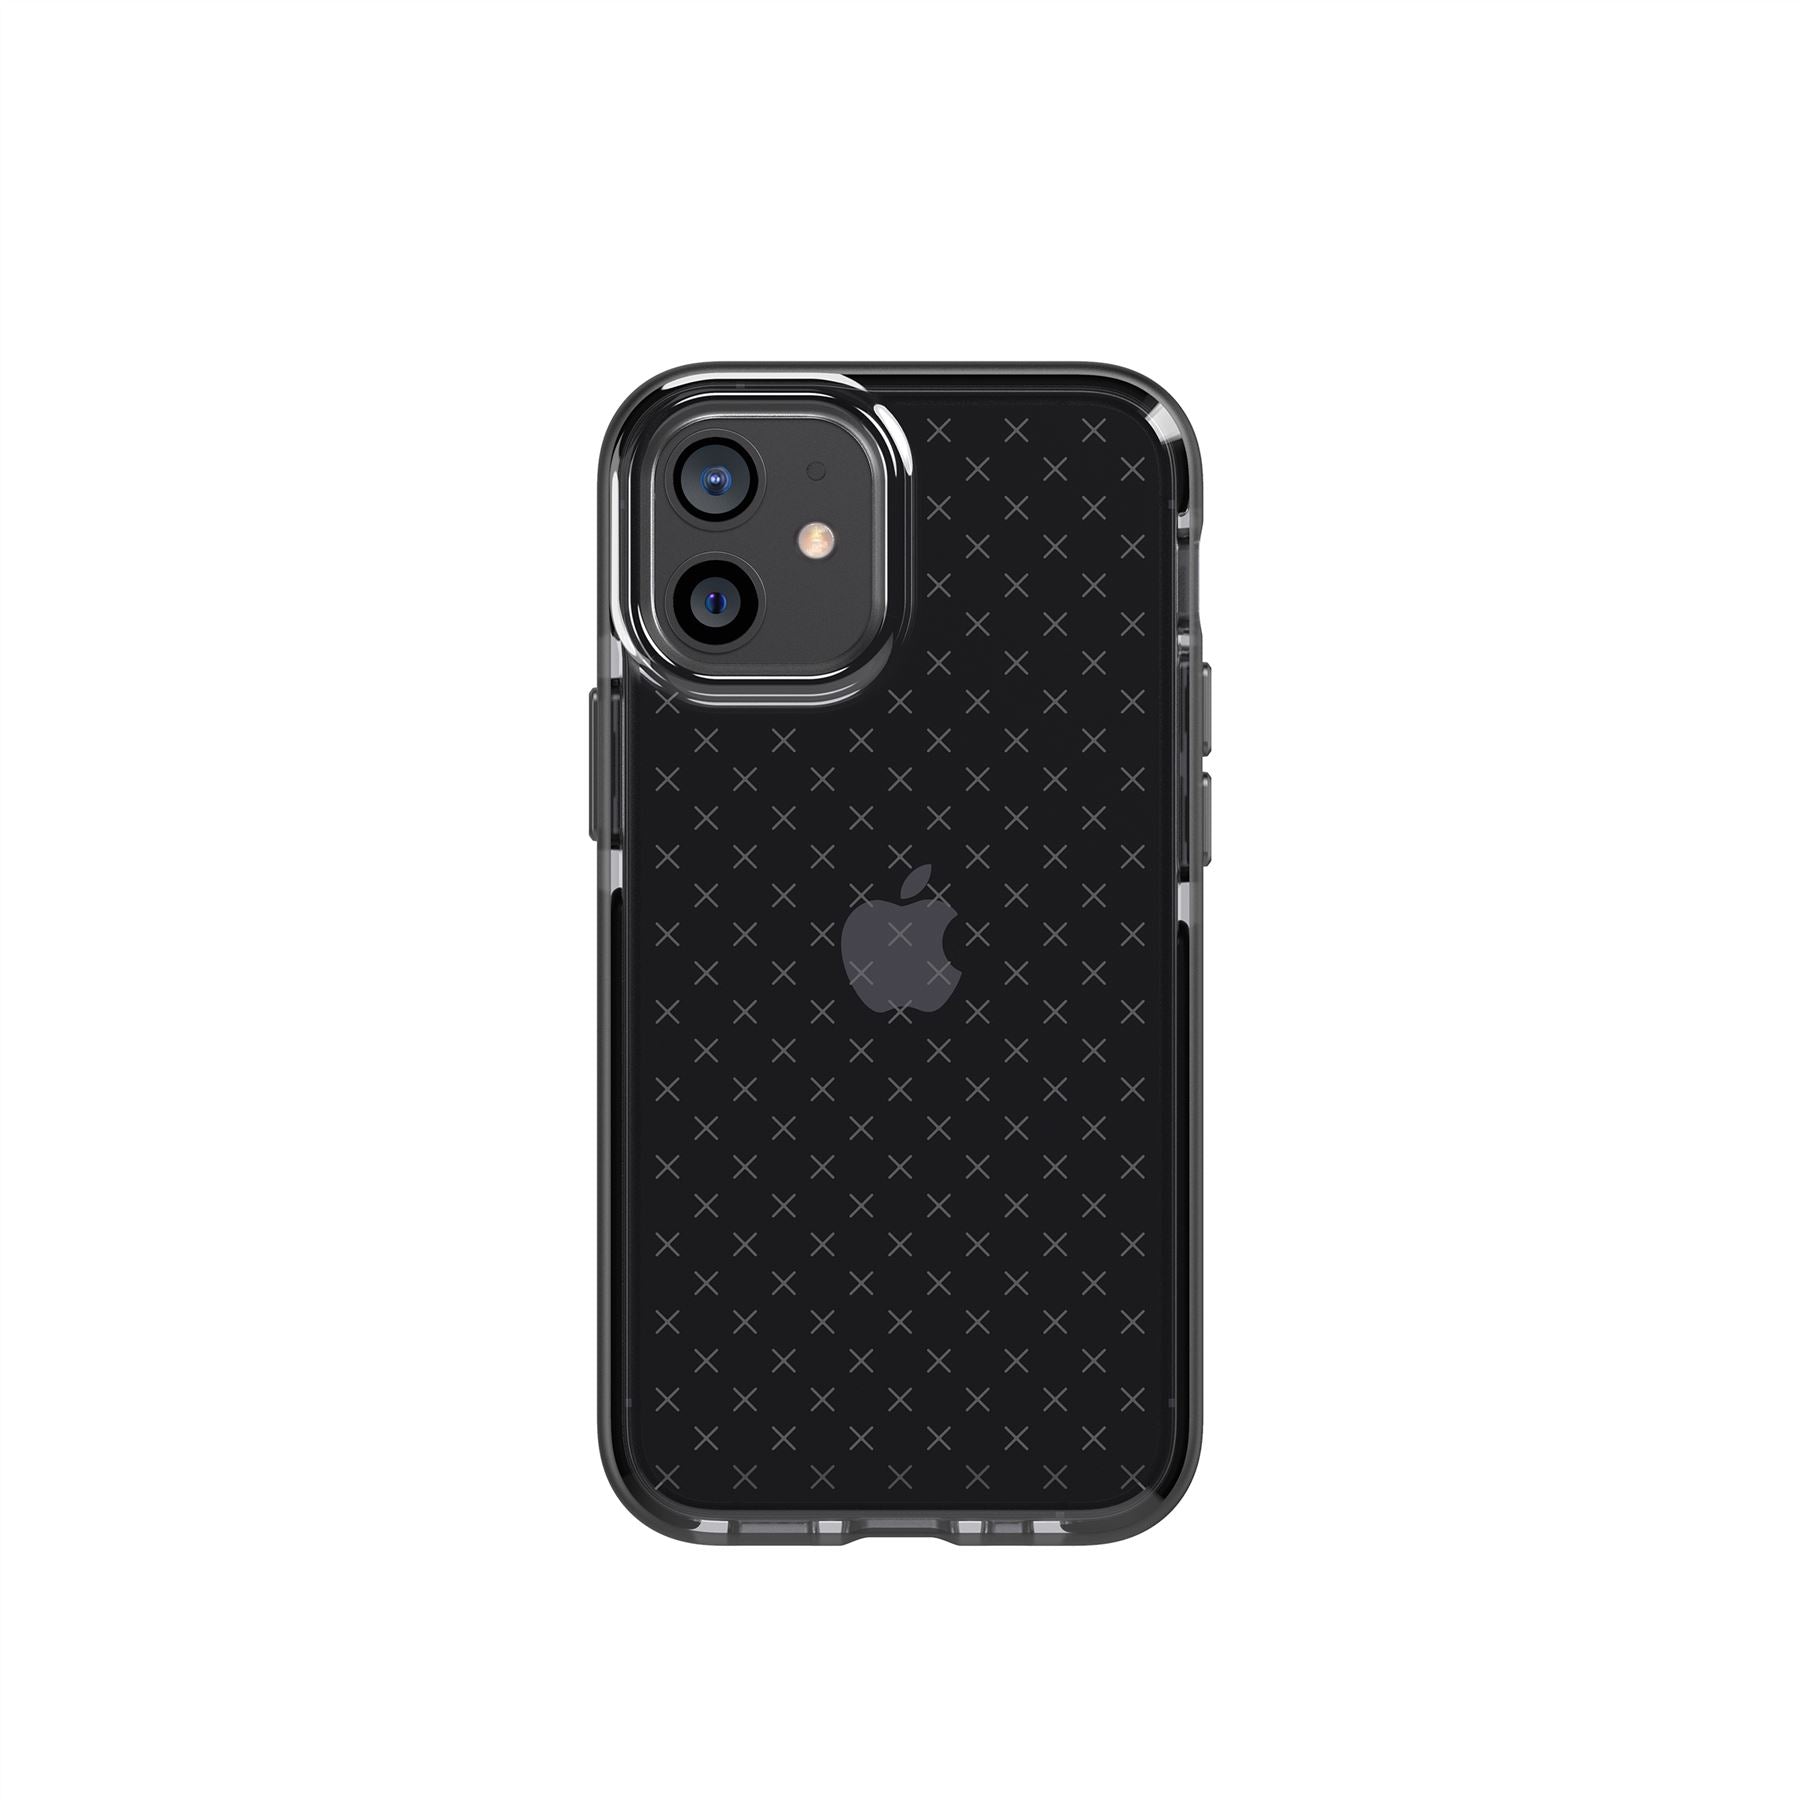 Evo Check - Apple iPhone 12 mini Case - Smokey Black